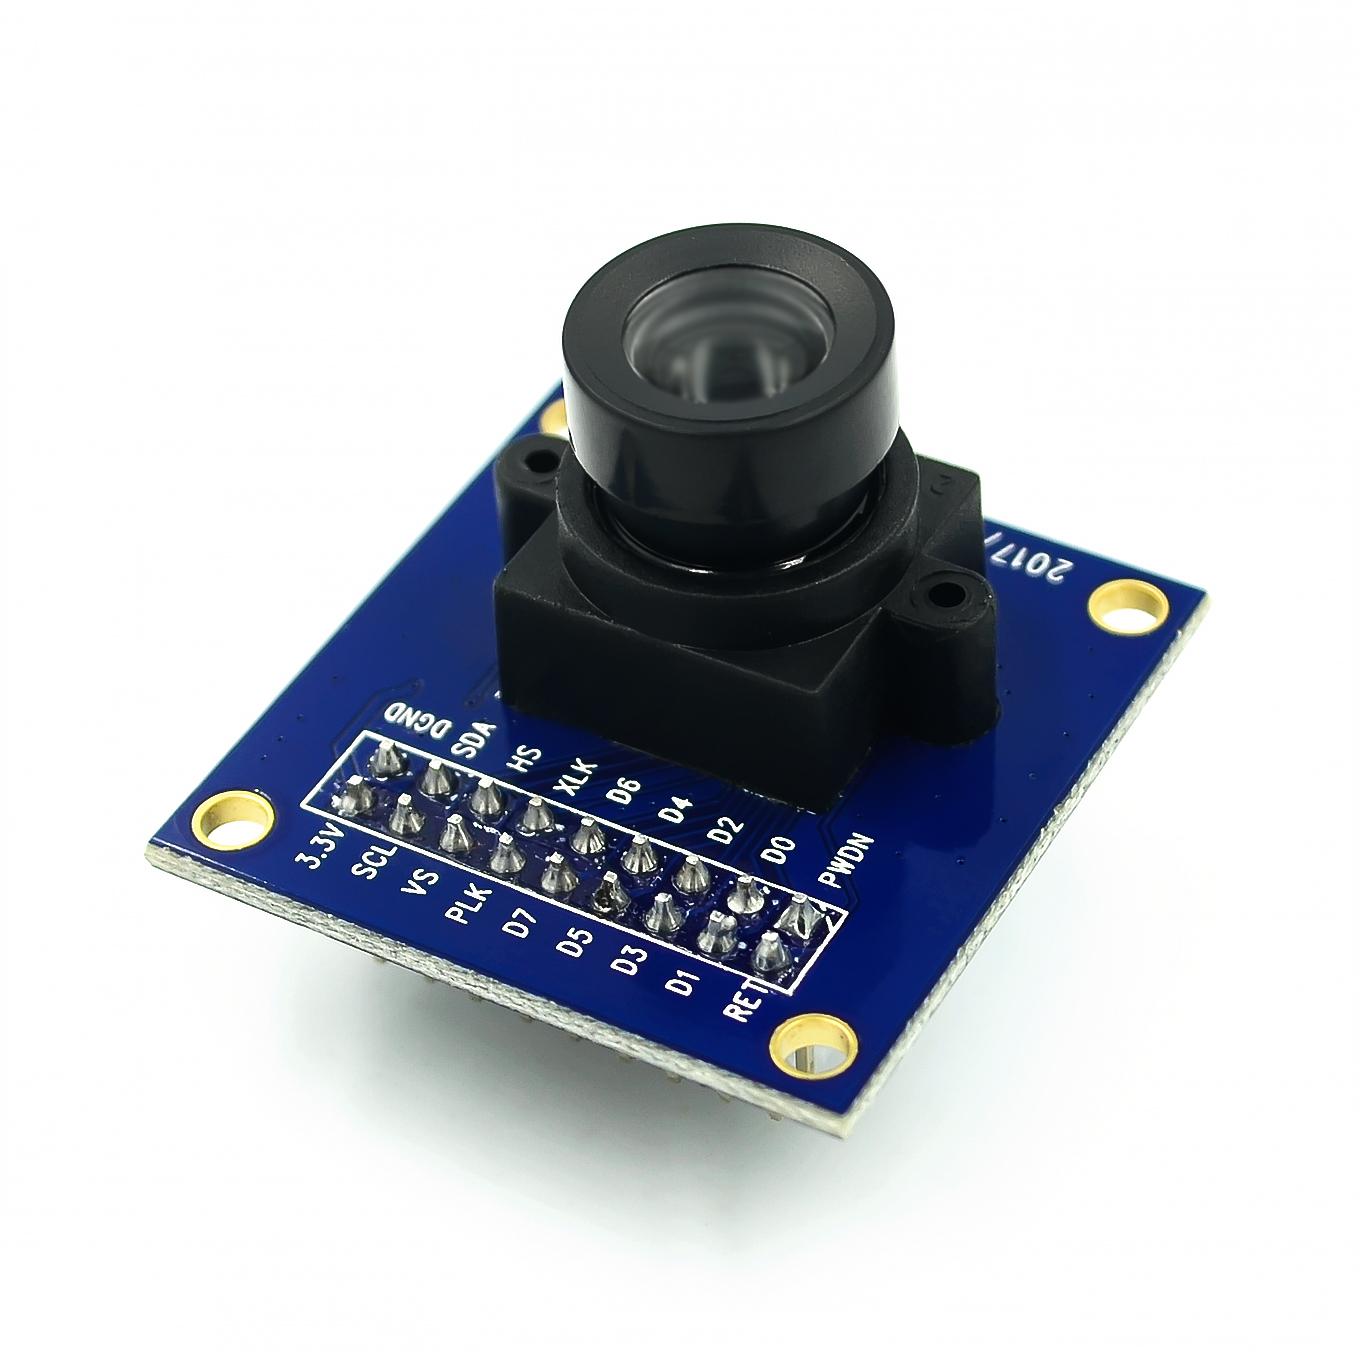 OV7670 camera module Supports VGA CIF auto exposure control display active size 640X480 for Arduino